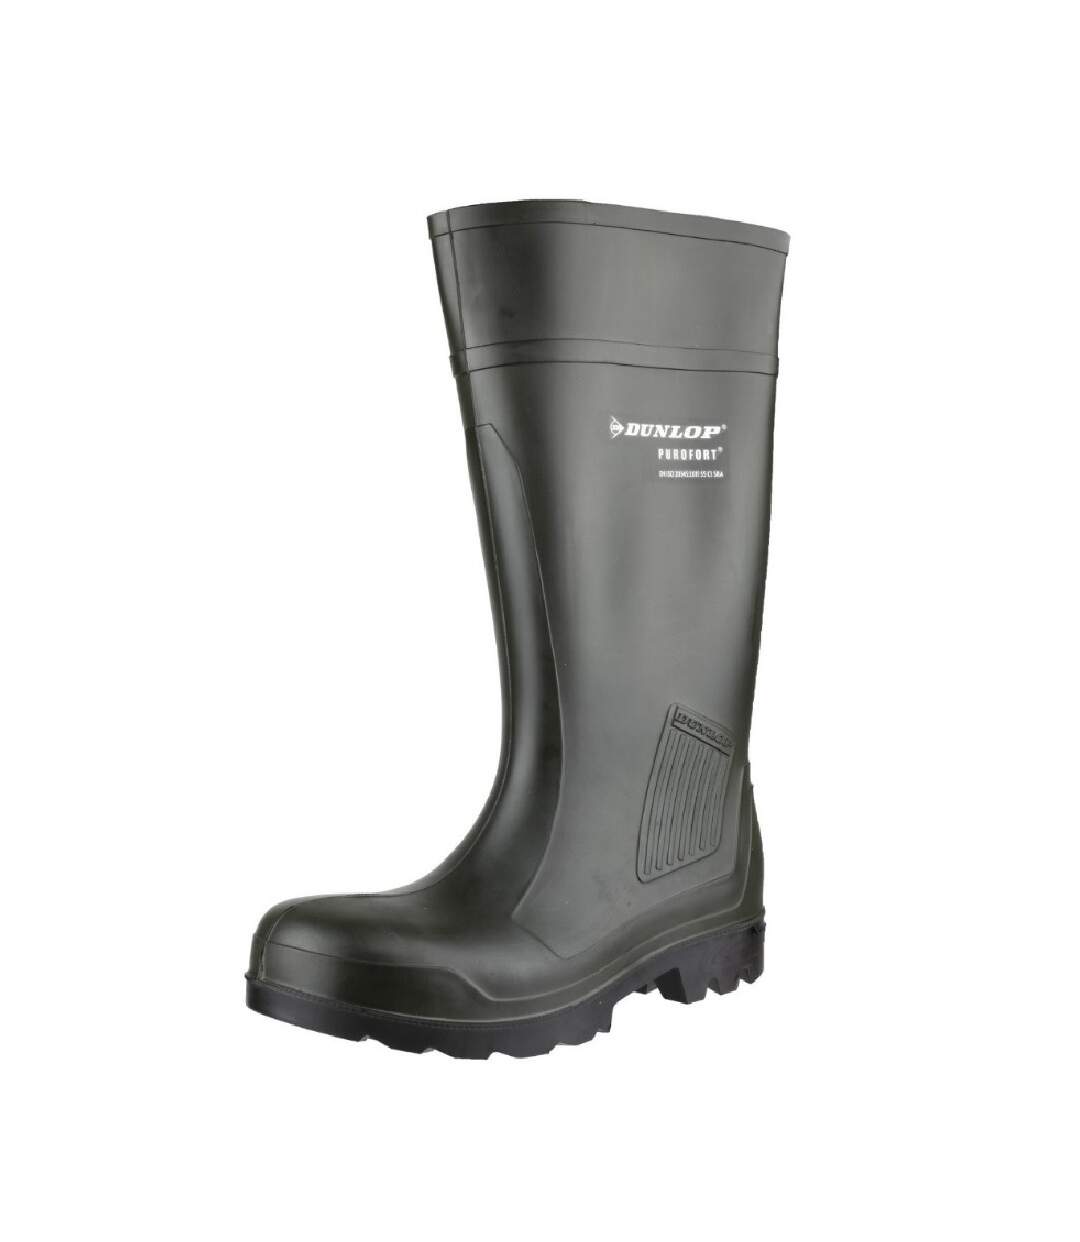 Dunlop Purofort Professional Safety C462933 Boxed Wellington / Womens Boots (Green) - UTFS1481